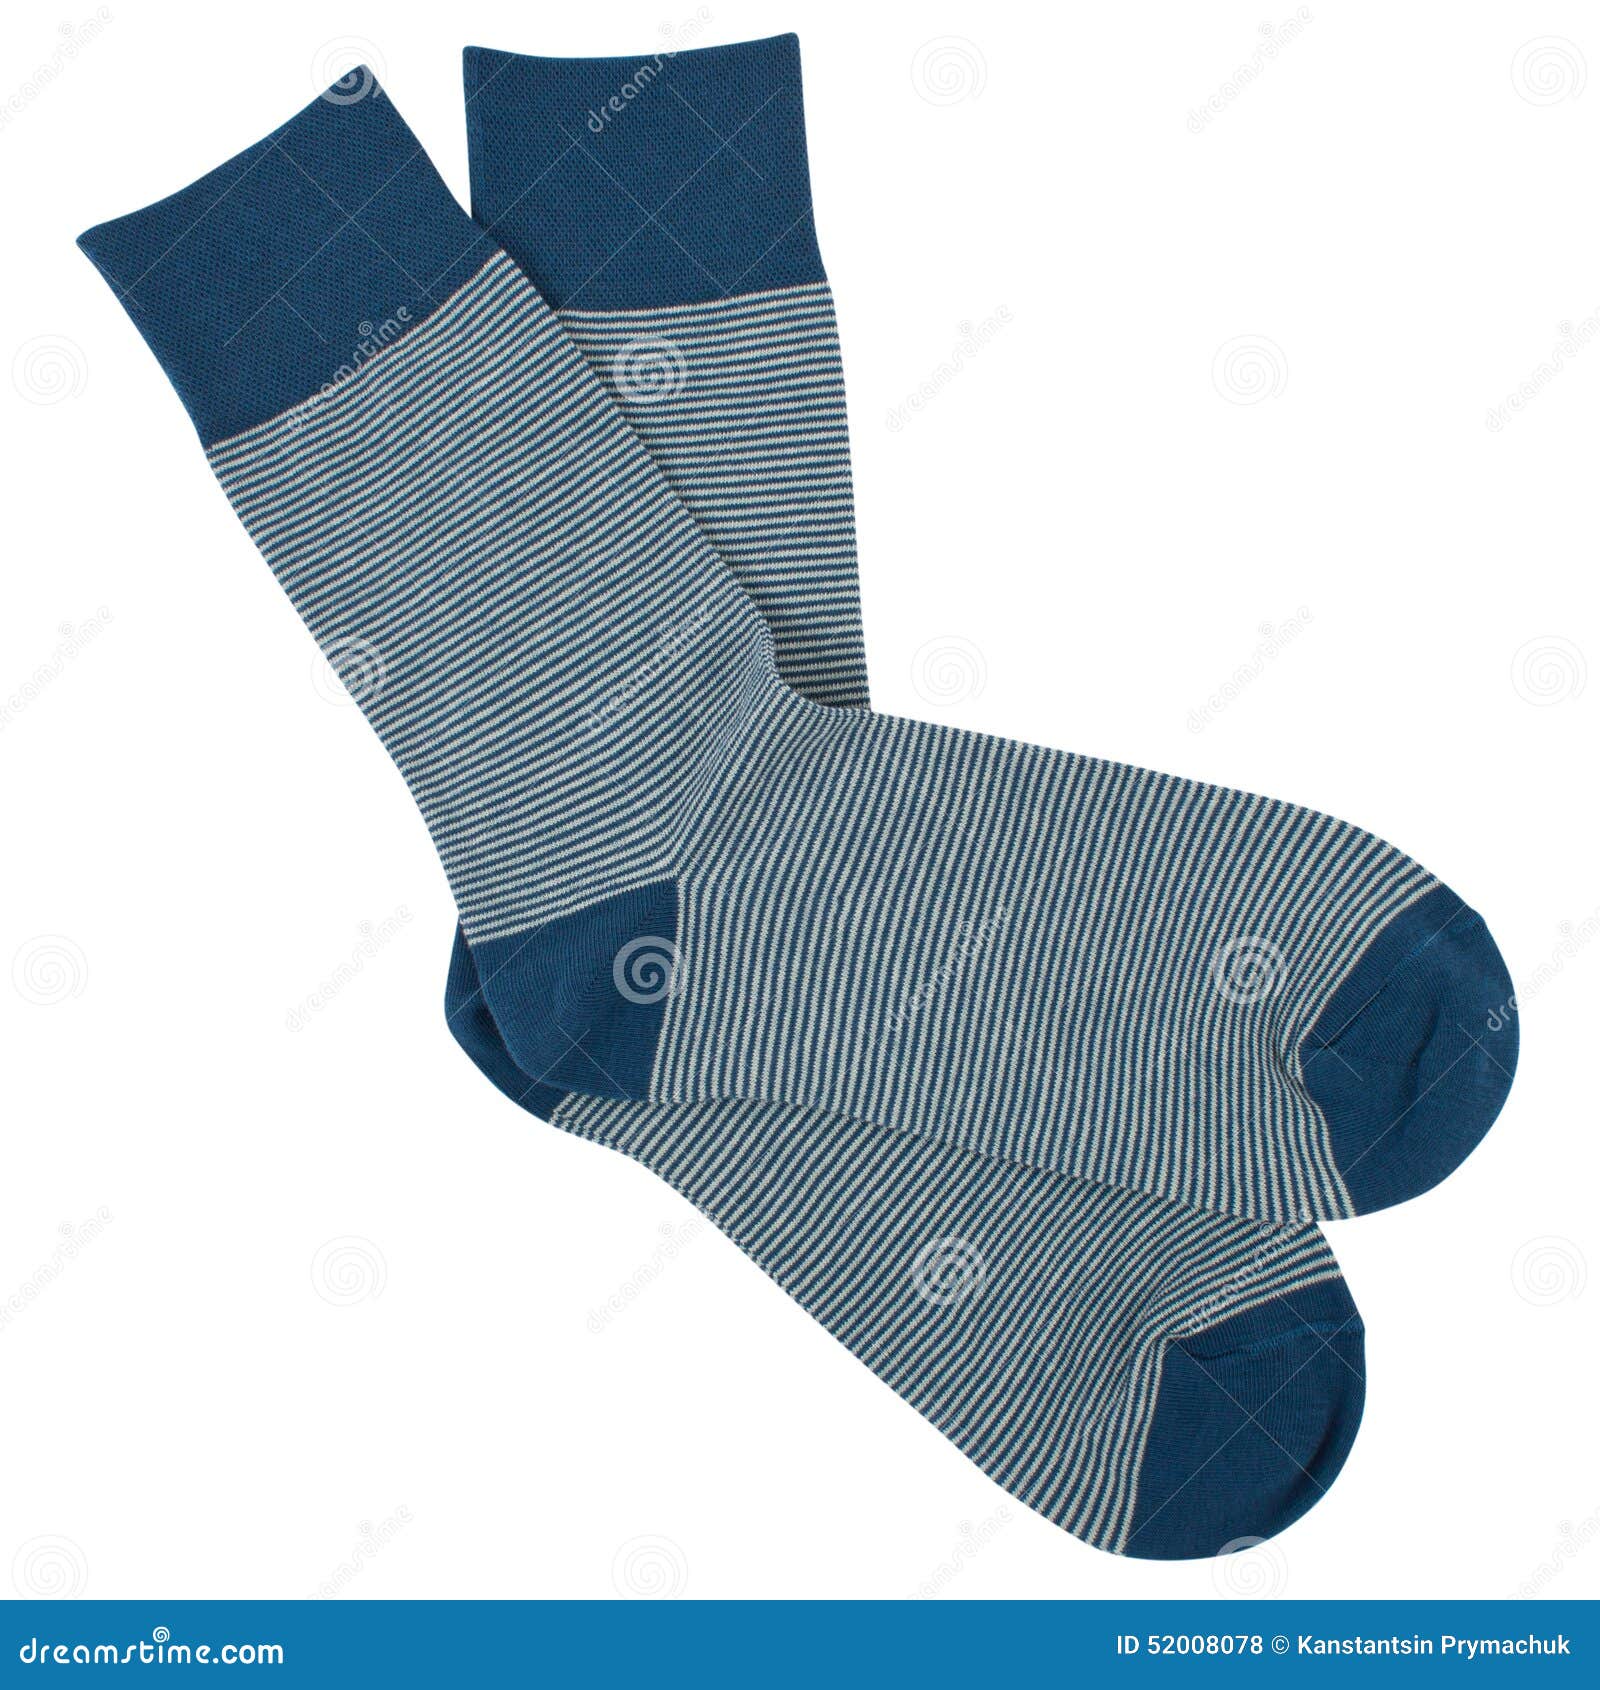 Pair Of Socks. Isolated On White Background Stock Photo - Image: 52008078